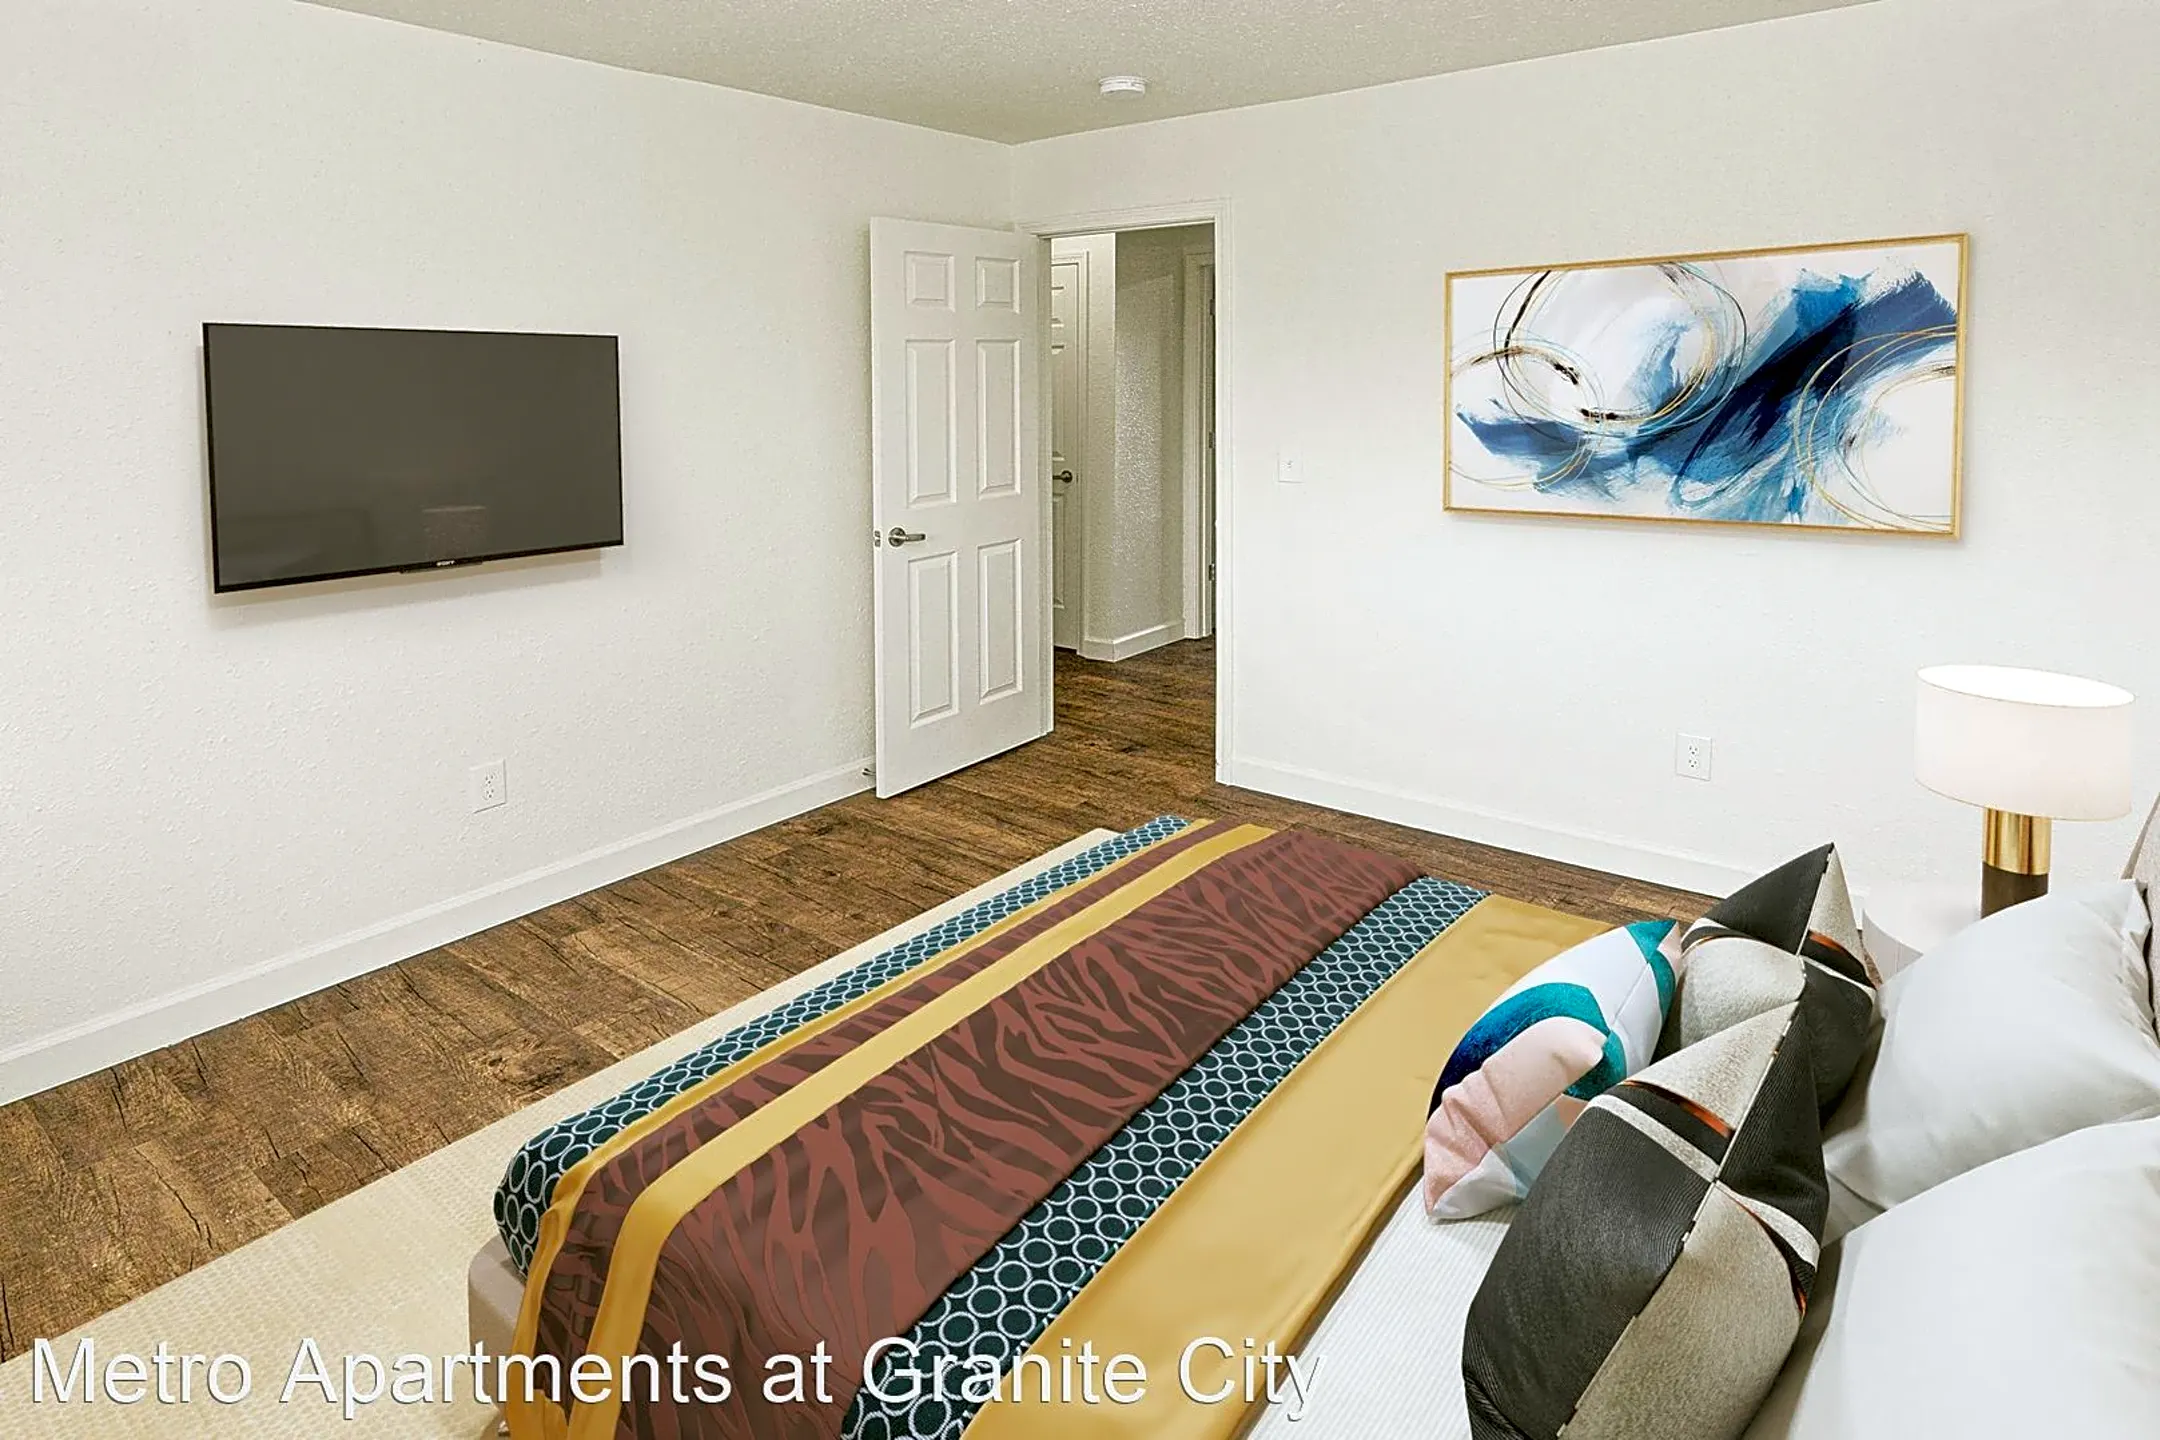 Bedroom - Metro Apartments at Granite City - Granite City, IL